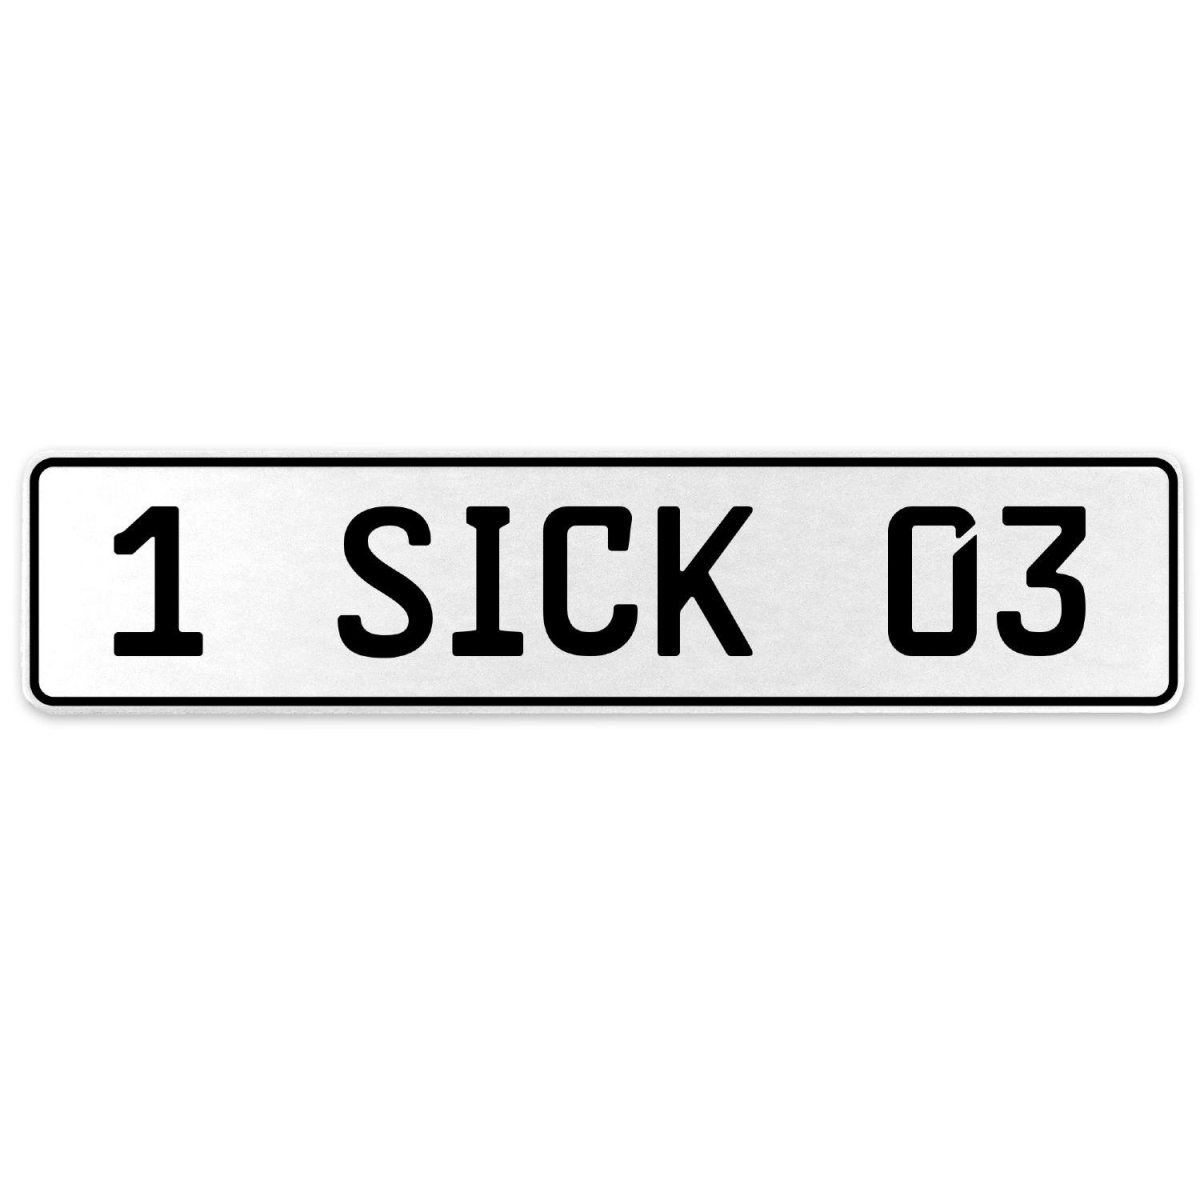 554402 1 Sick 03 - White Aluminum Street Sign Mancave Euro Plate Name Door Sign Wall